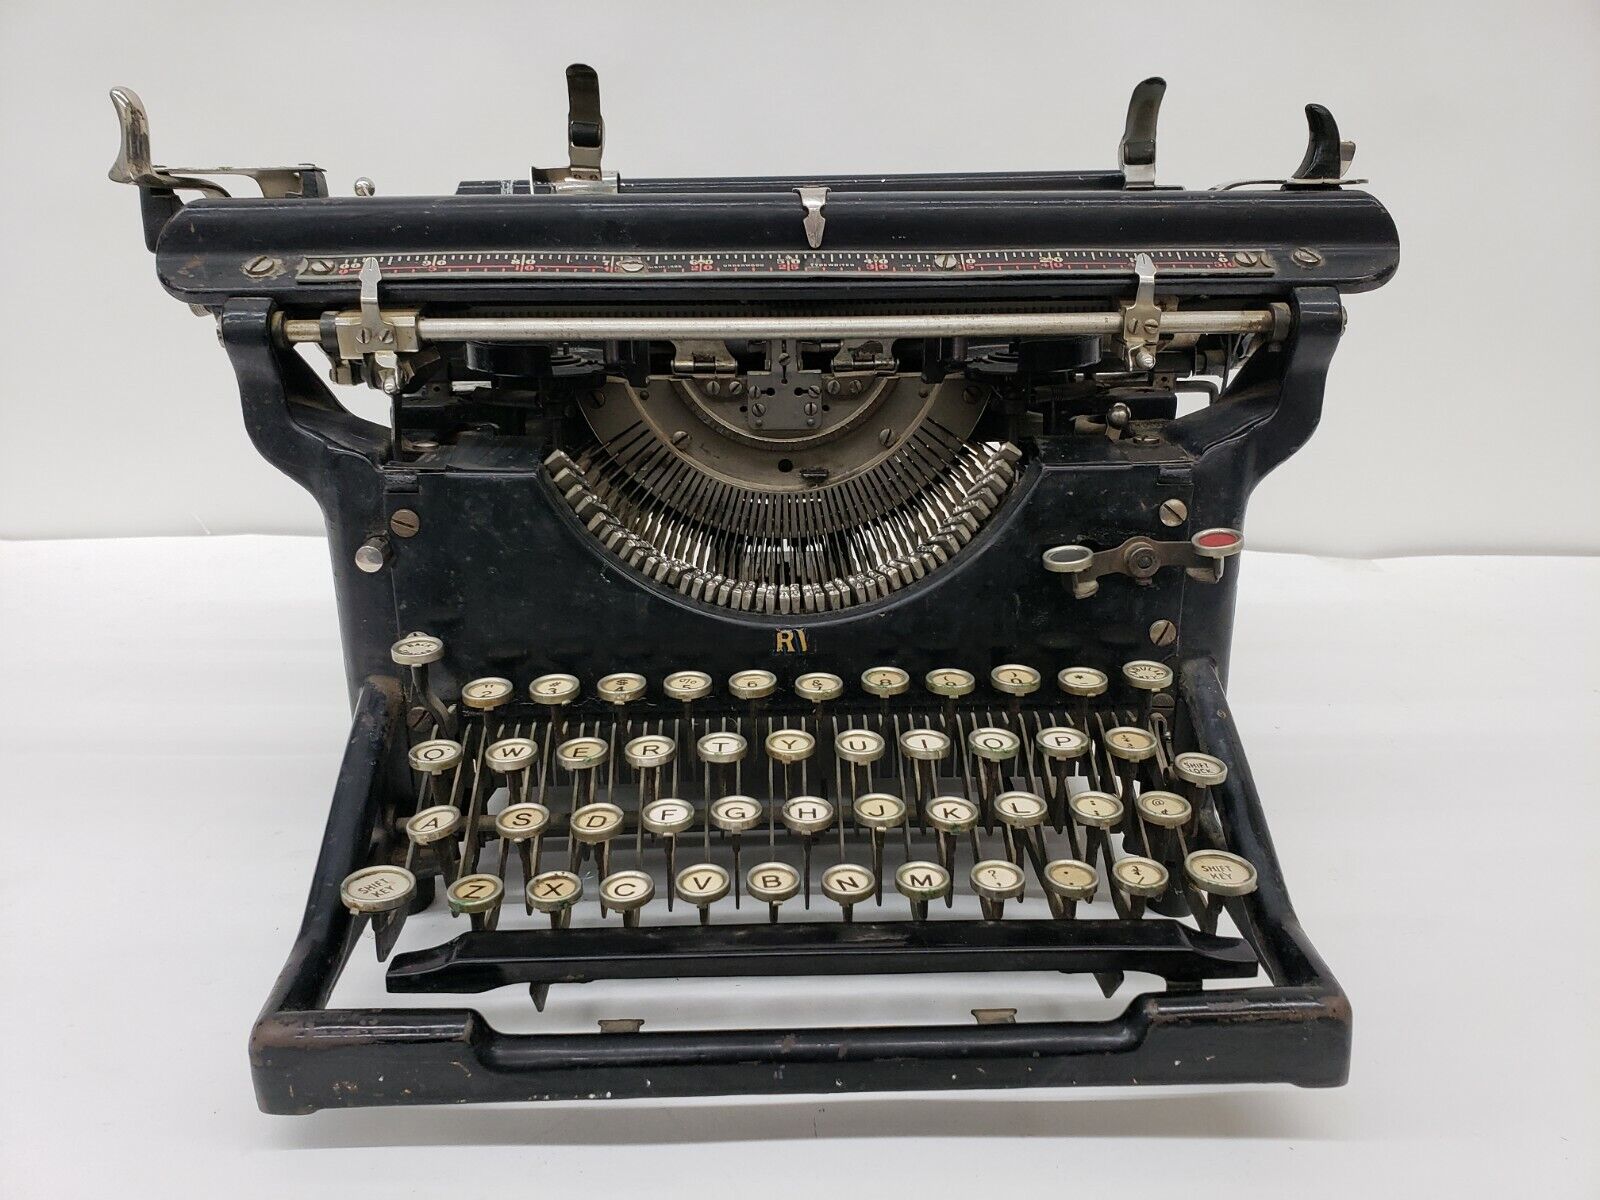 Underwood typewriter no 5 serial number 237,434 early 1900s type writer